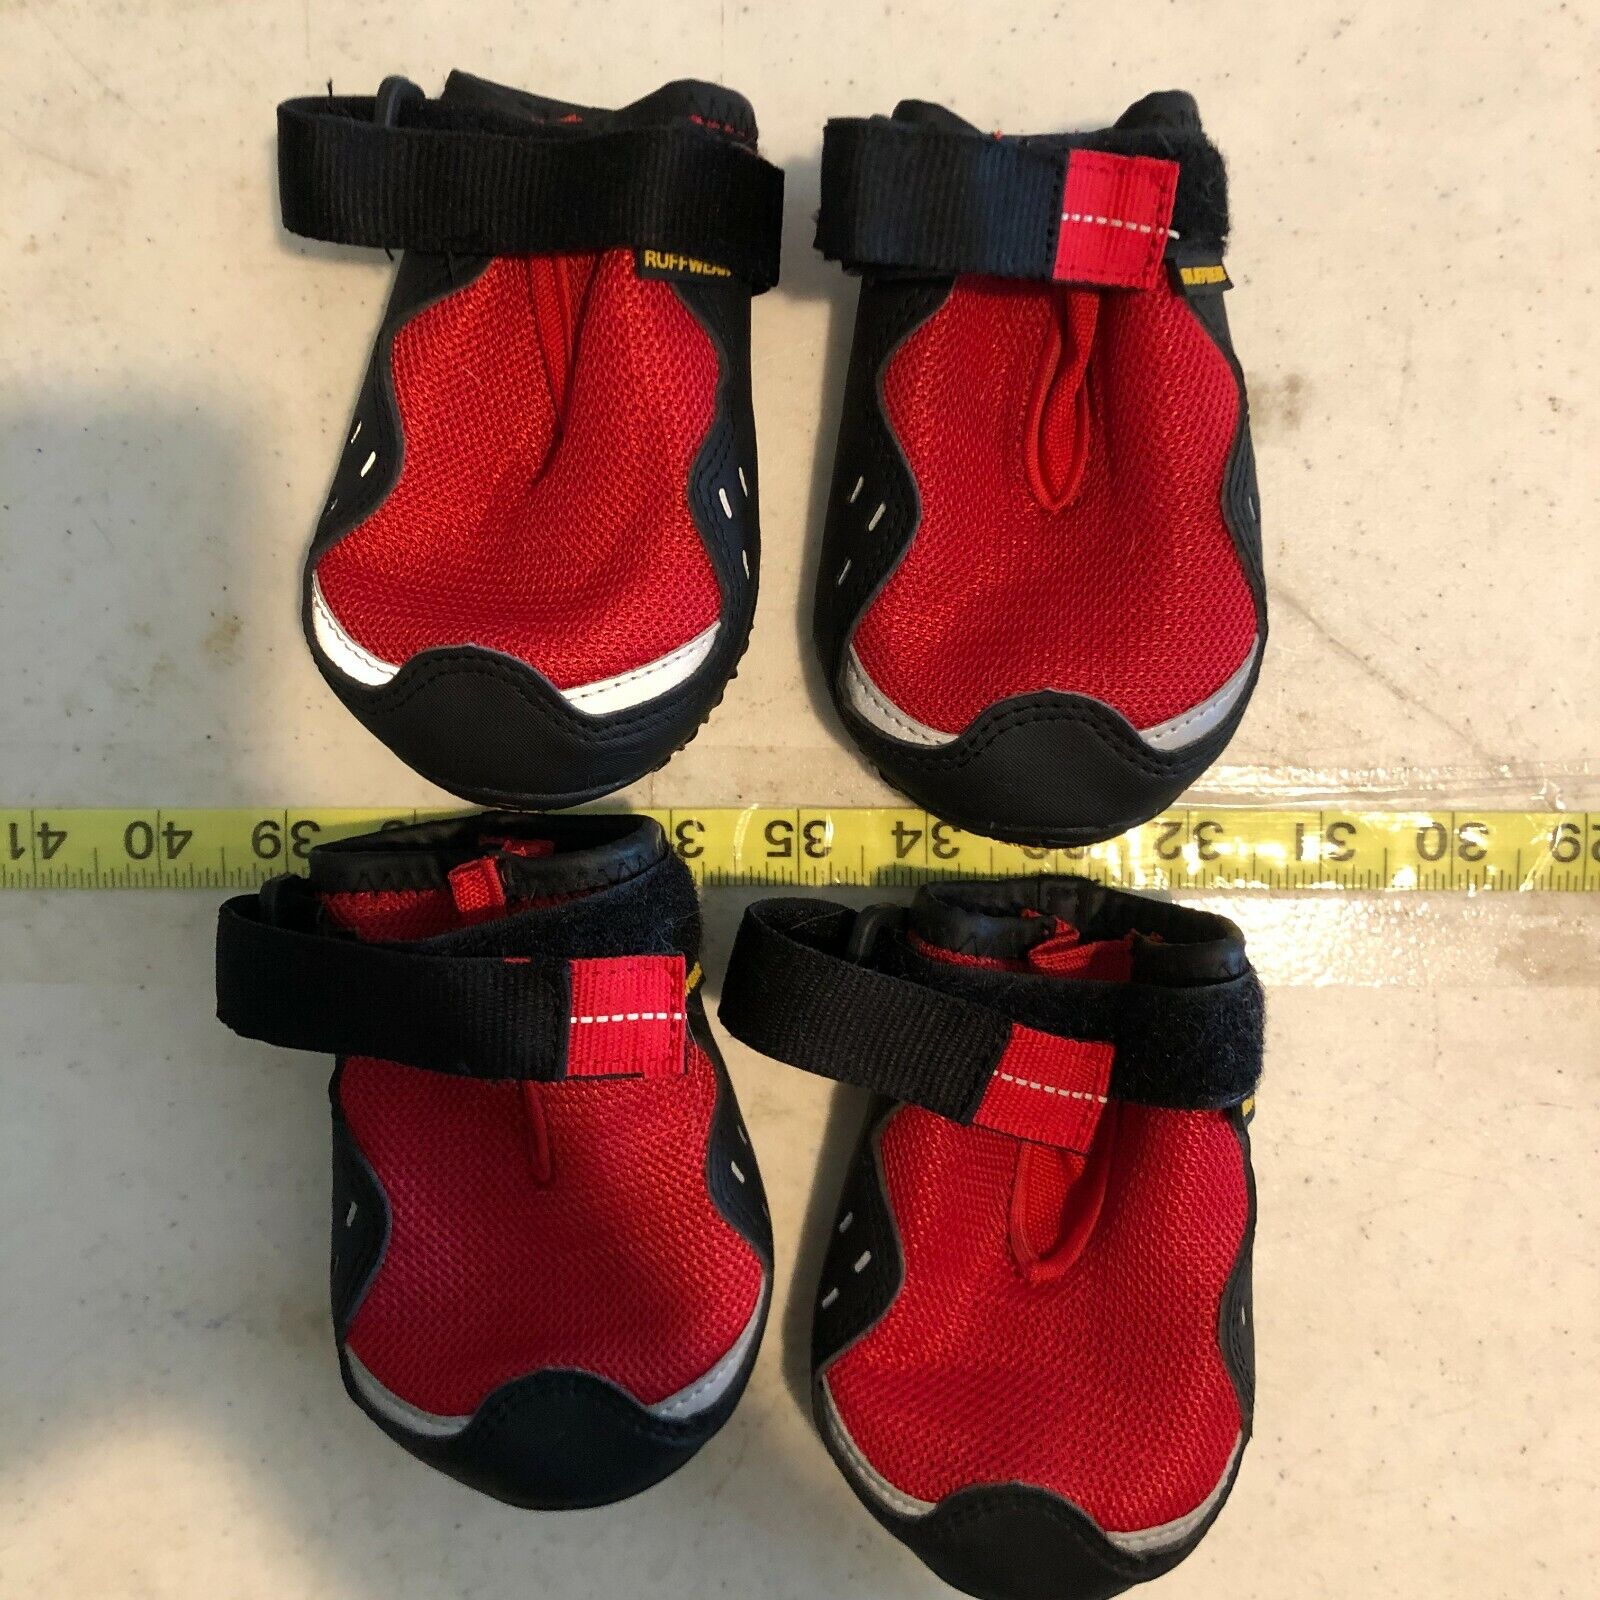 Ruffwear Grip Trex Dog Boots Shoes Size L Set of 4 